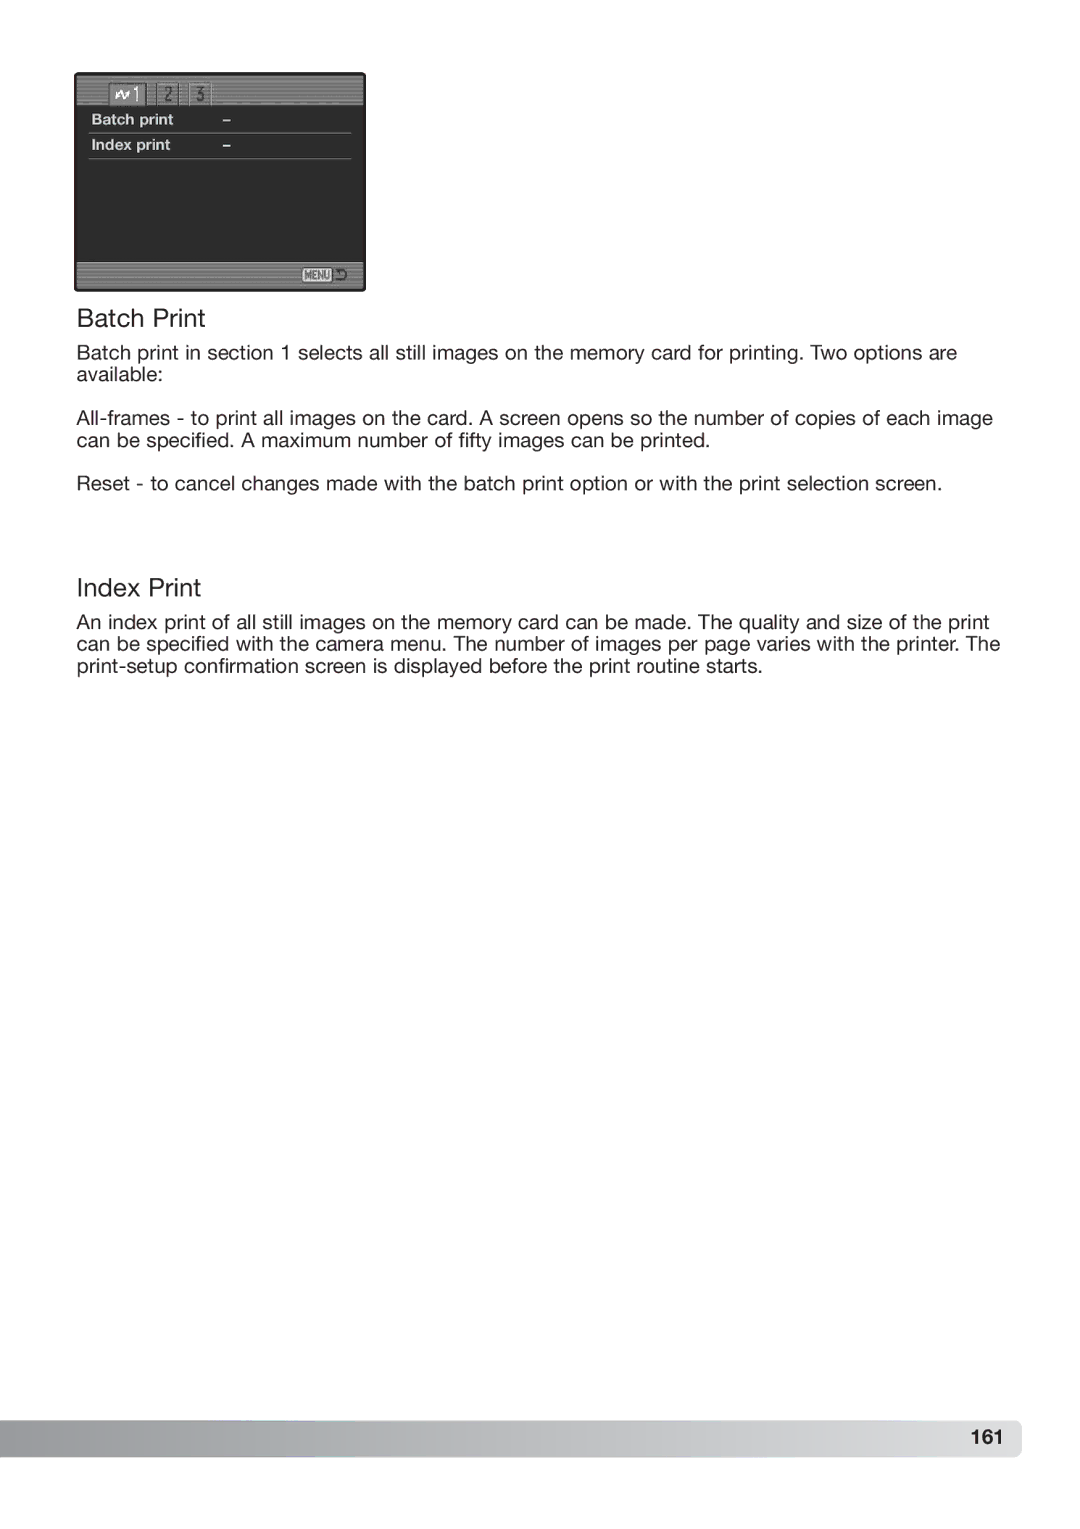 Konica Minolta DiMAGE_A2 instruction manual Batch Print, Index Print, 161 